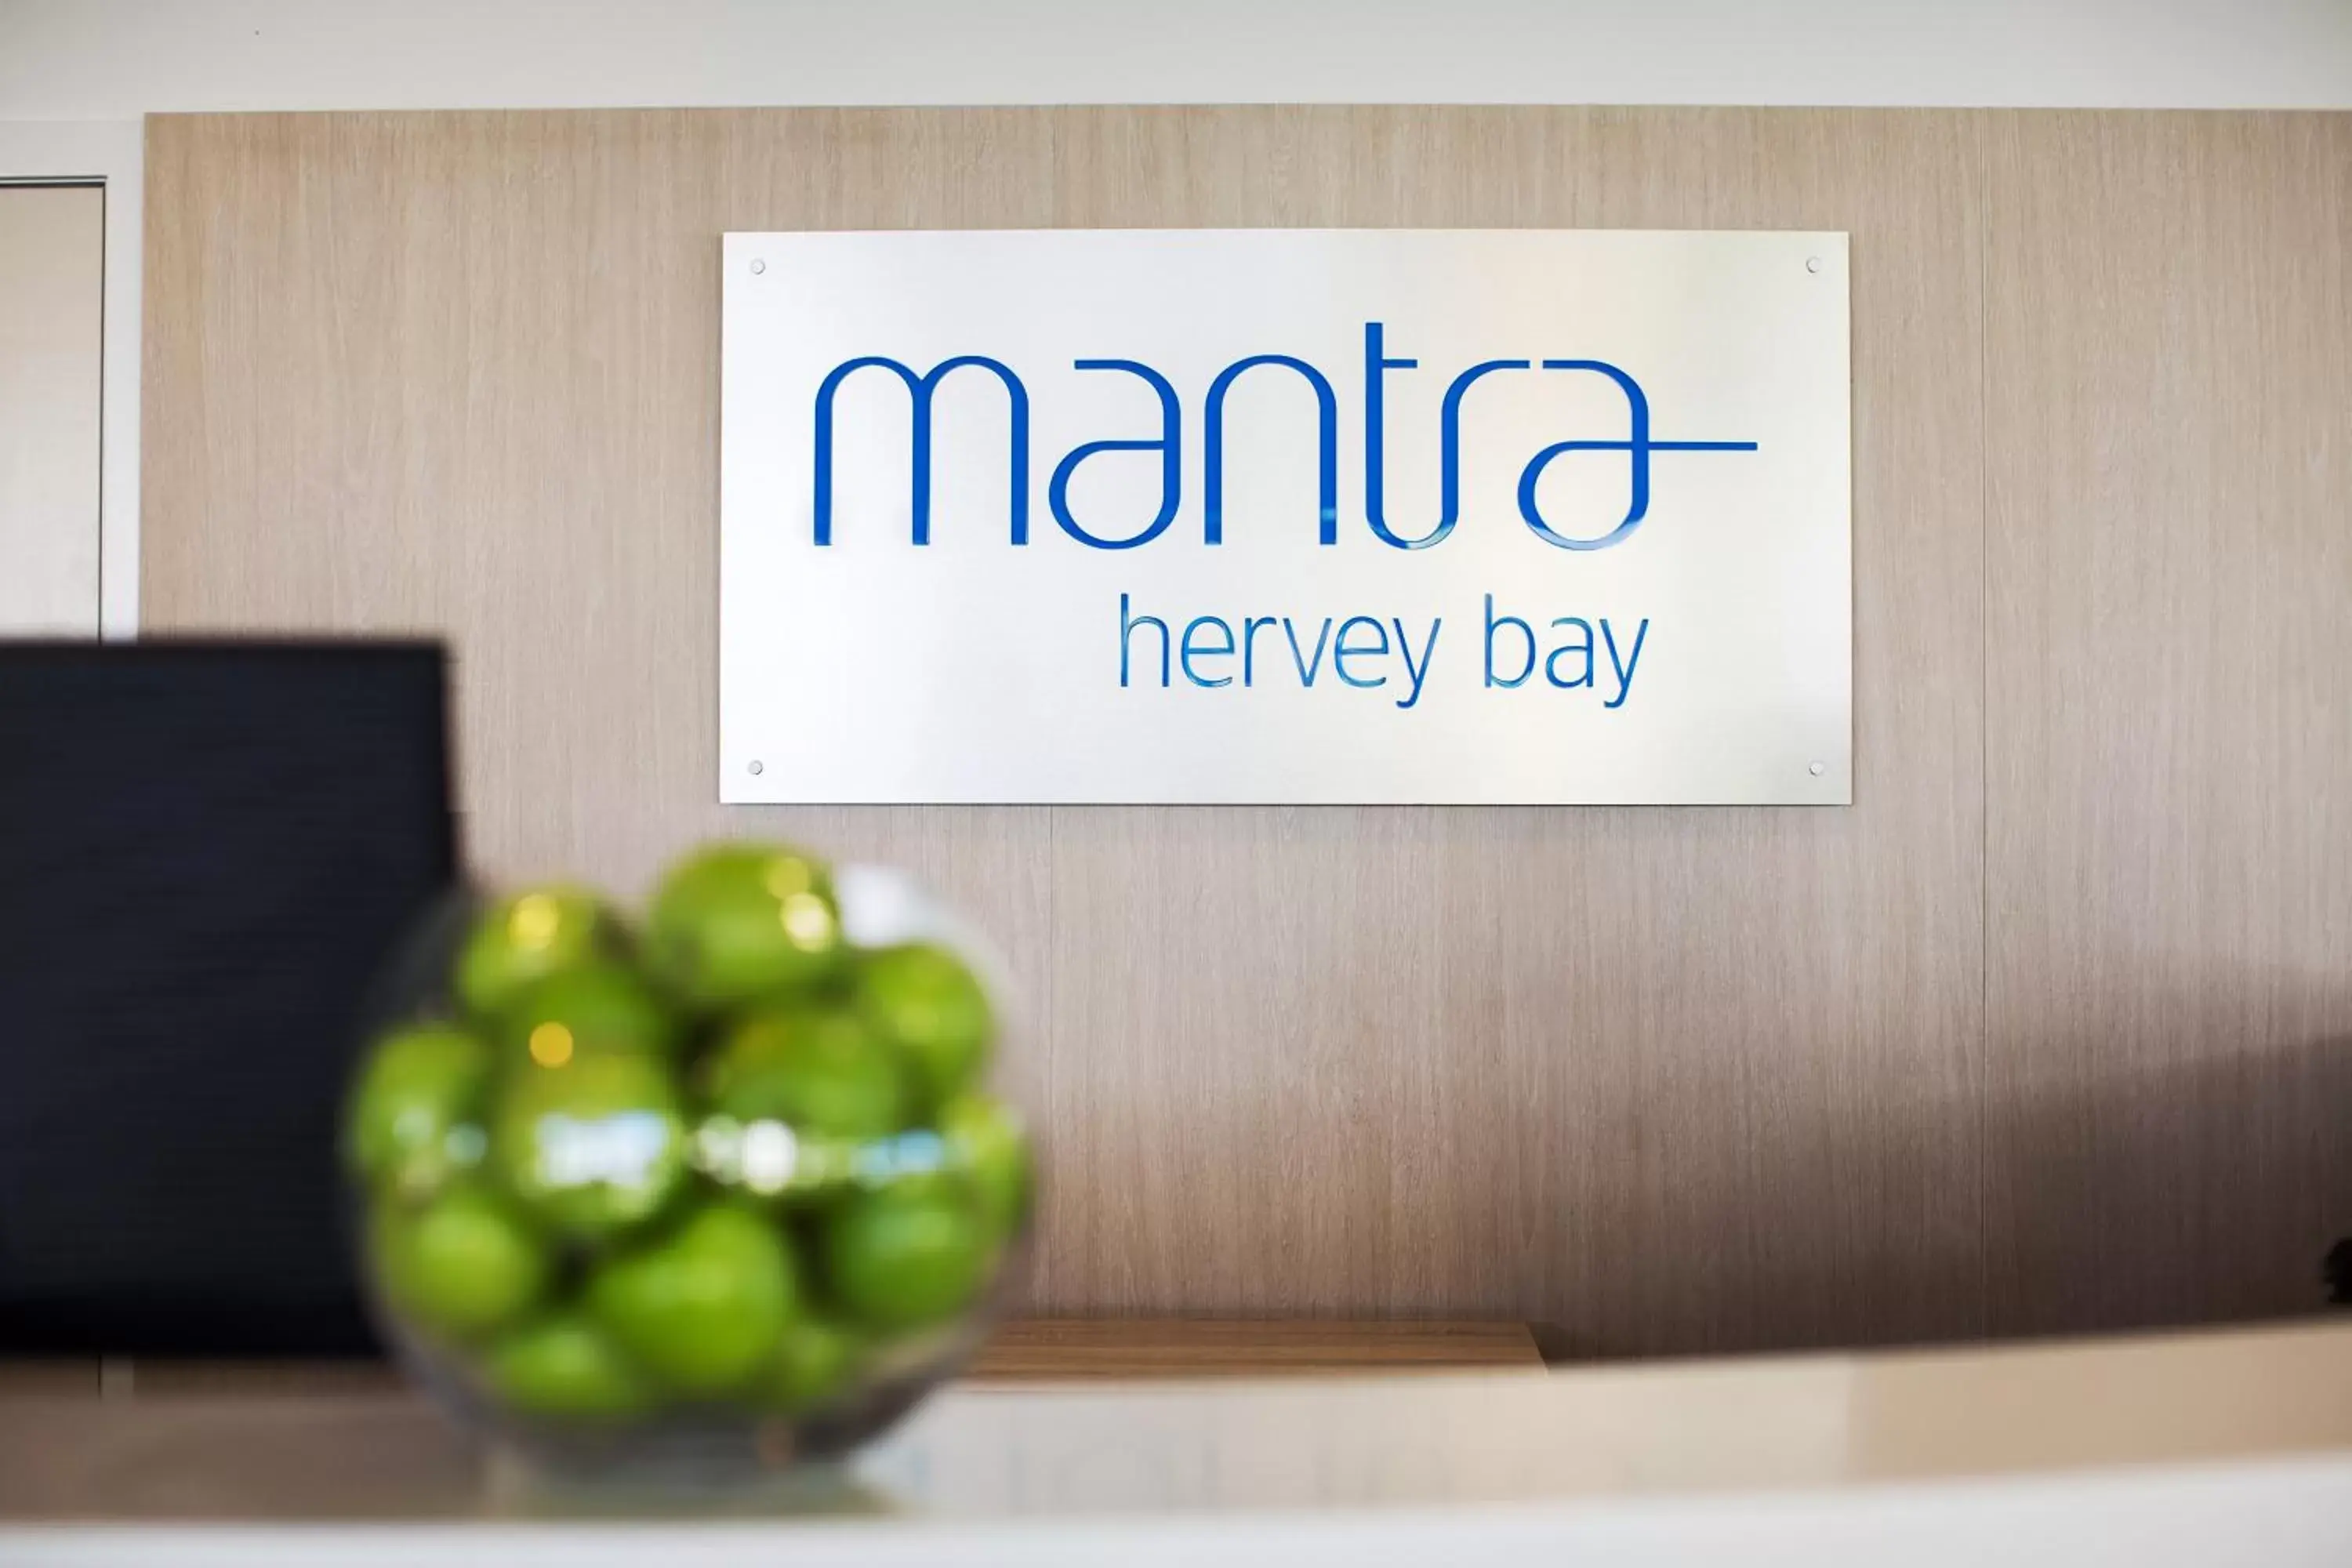 Lobby or reception in Mantra Hervey Bay